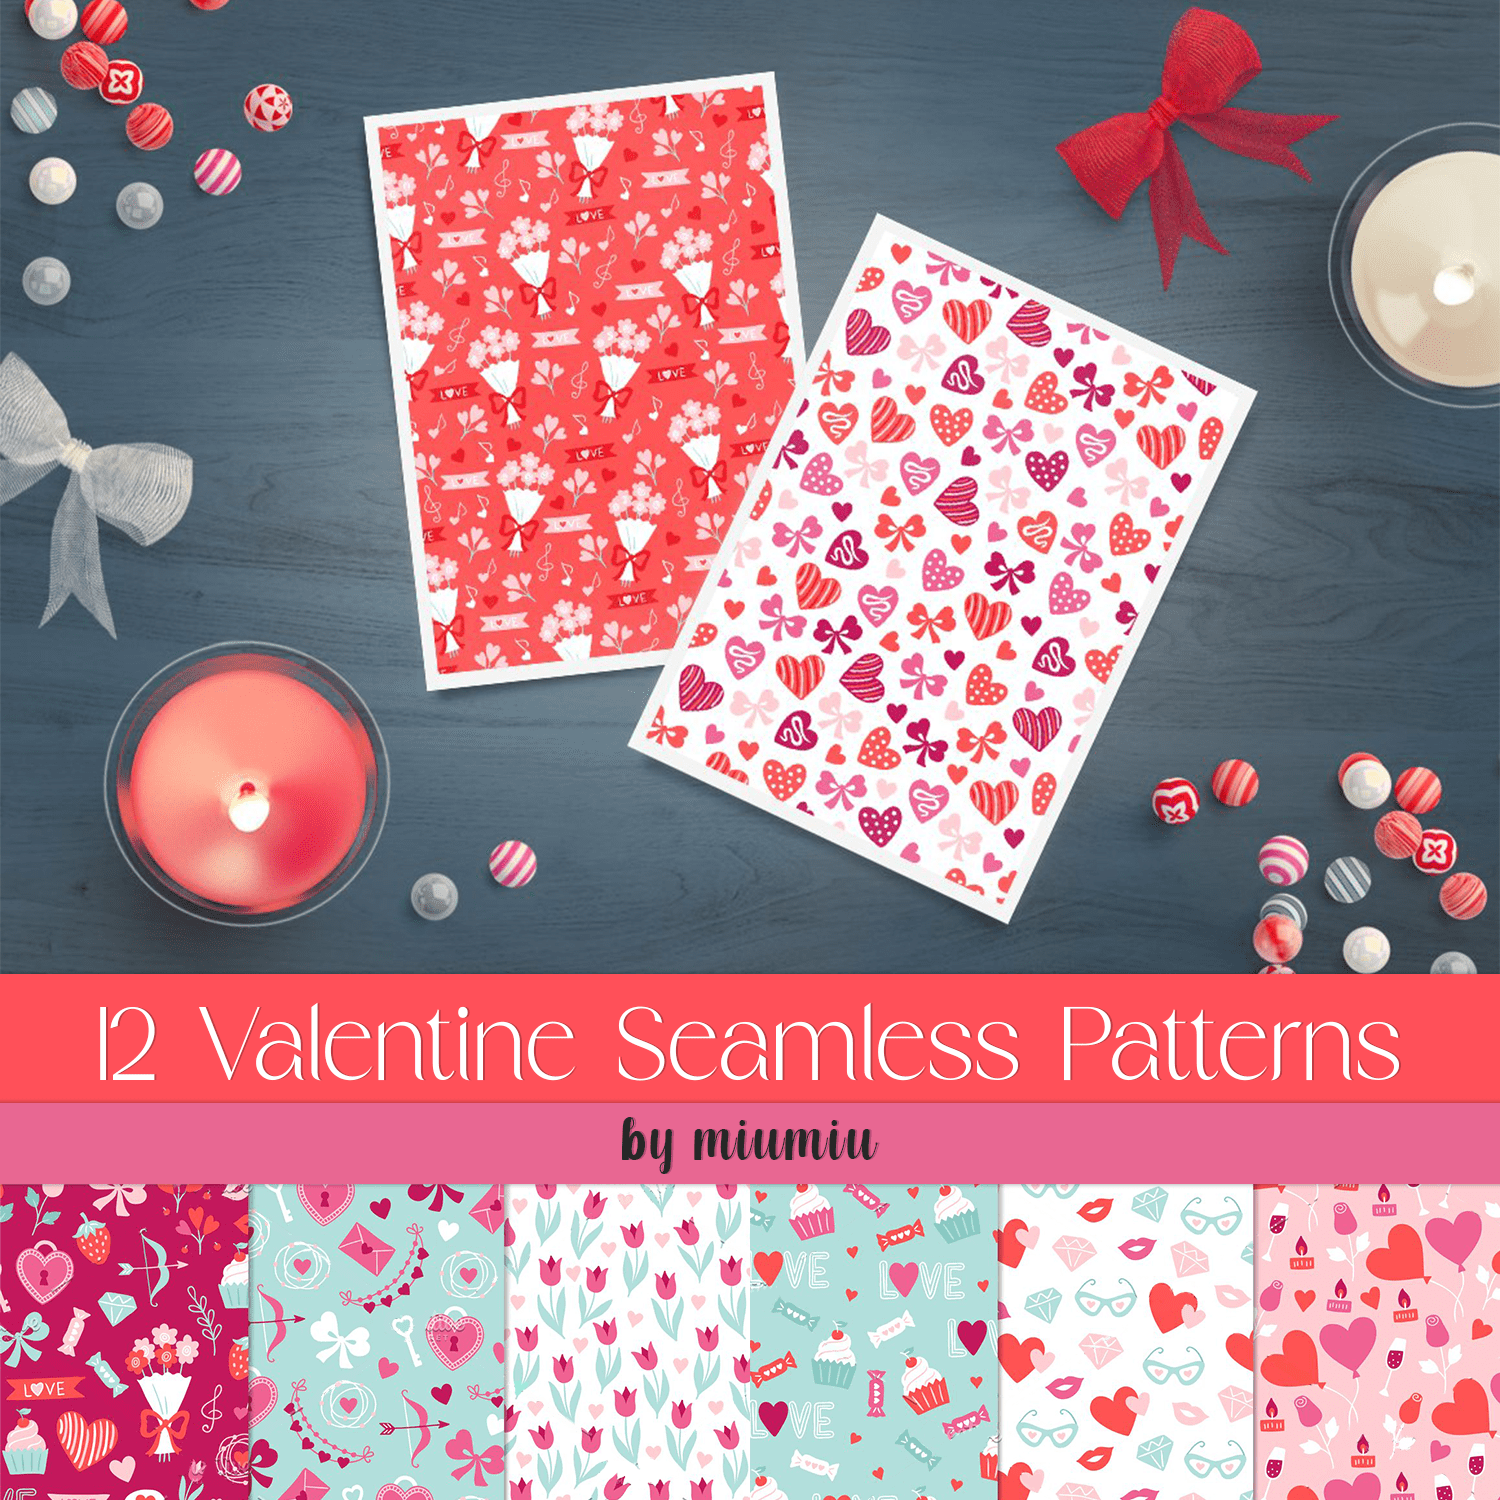 12 Valentine Seamless Patterns cover.